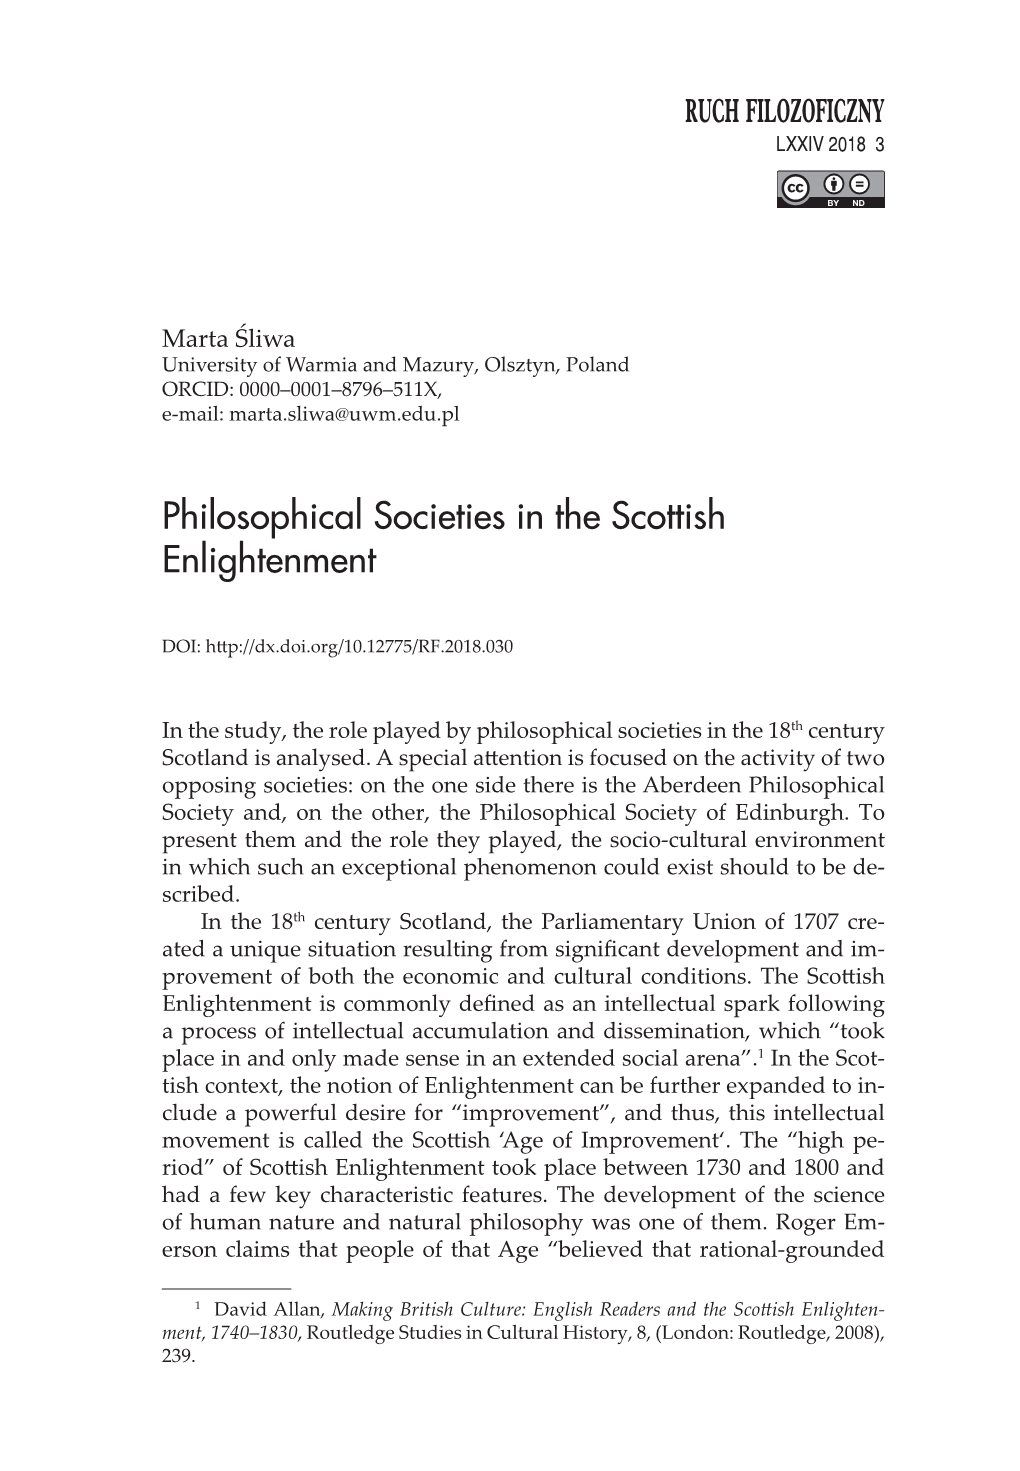 Philosophical Societies in the Scottish Enlightenment